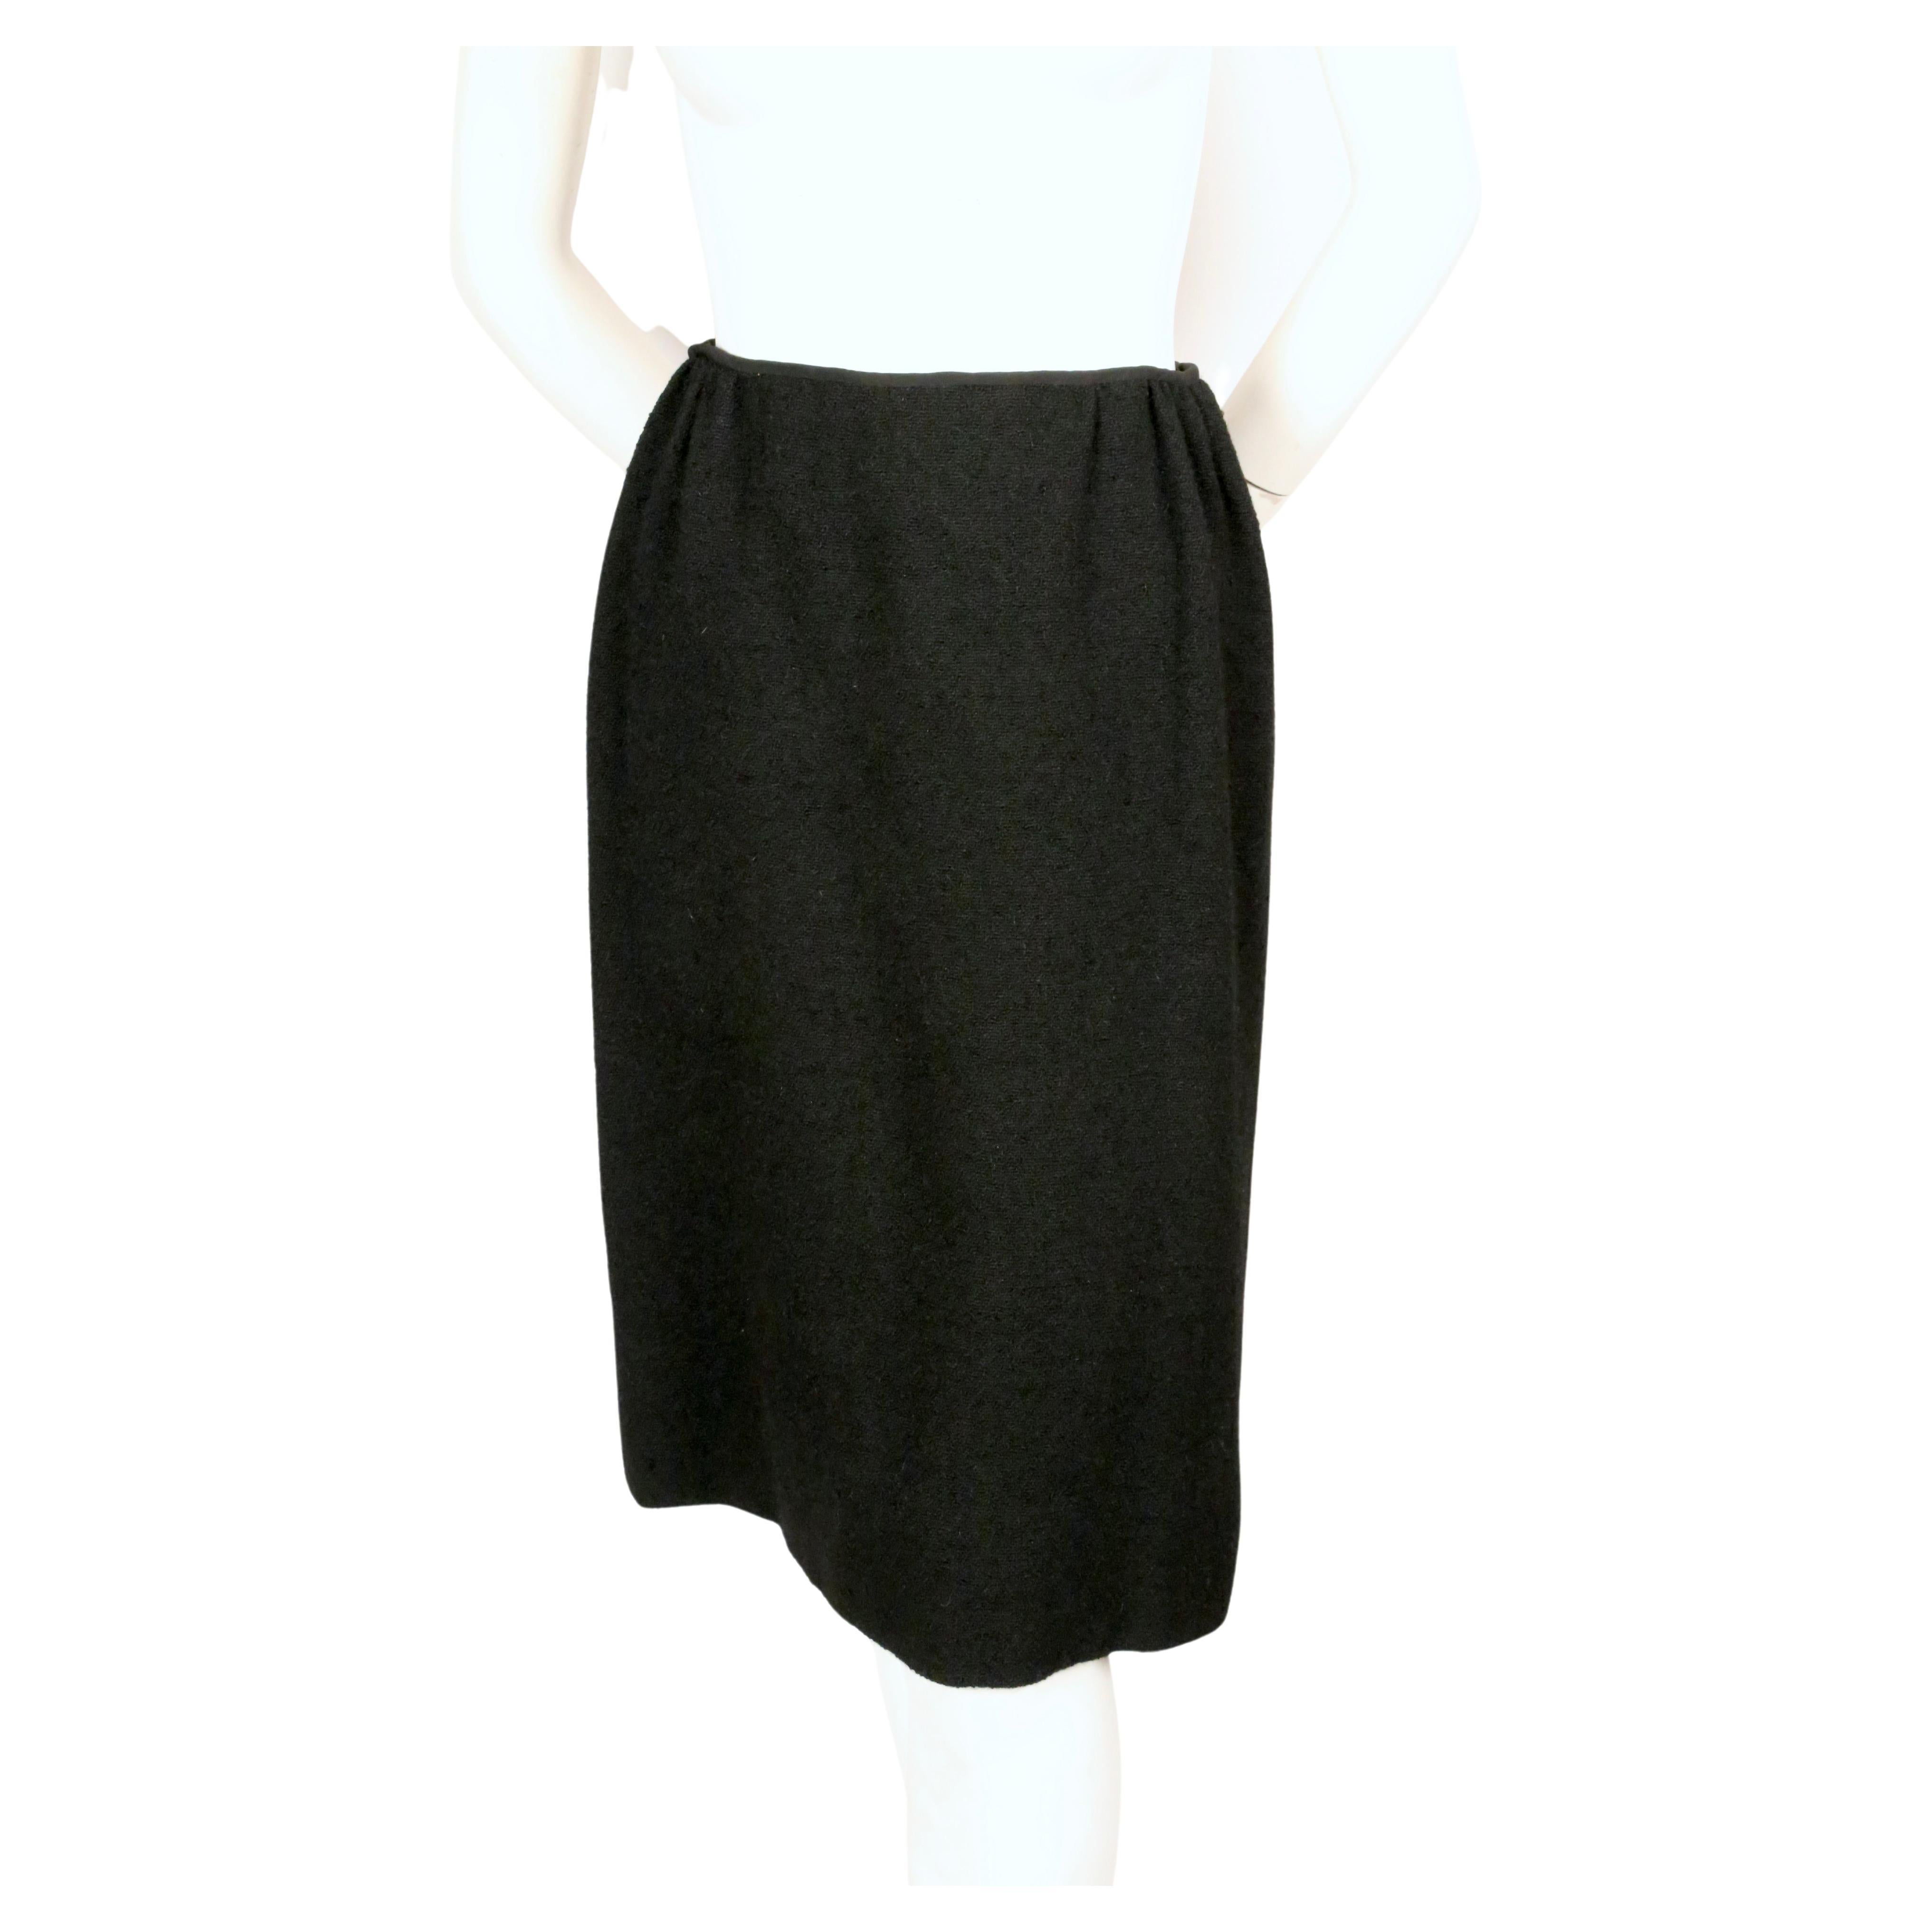 1958 EISA by CRISTOBAL BALENCIAGA haute couture black boucle wool skirt ...